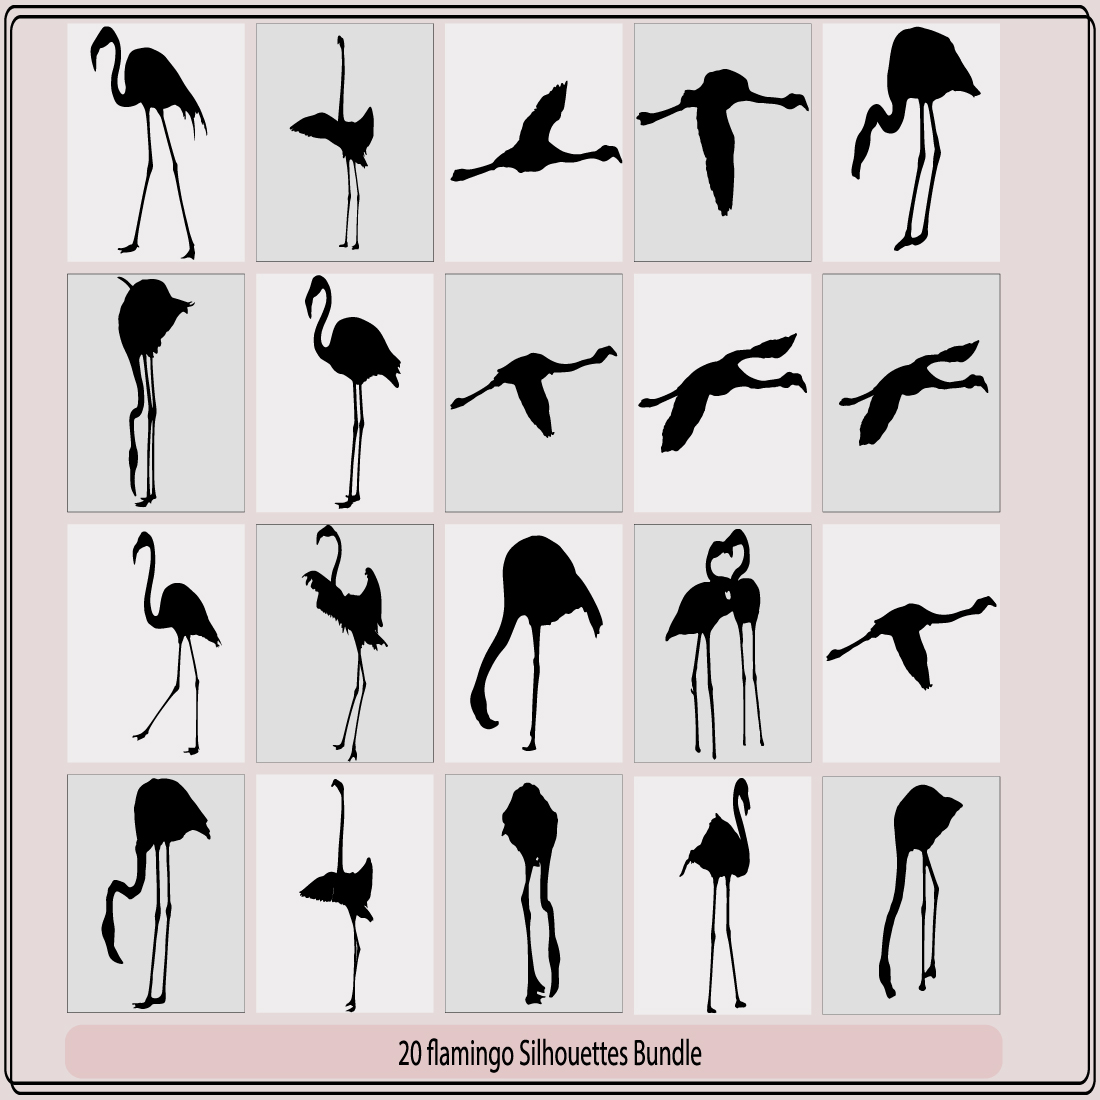 Flamingo silhouettes,Black silhouette flamingo logo vector,Flamingo Set Black and White cover image.